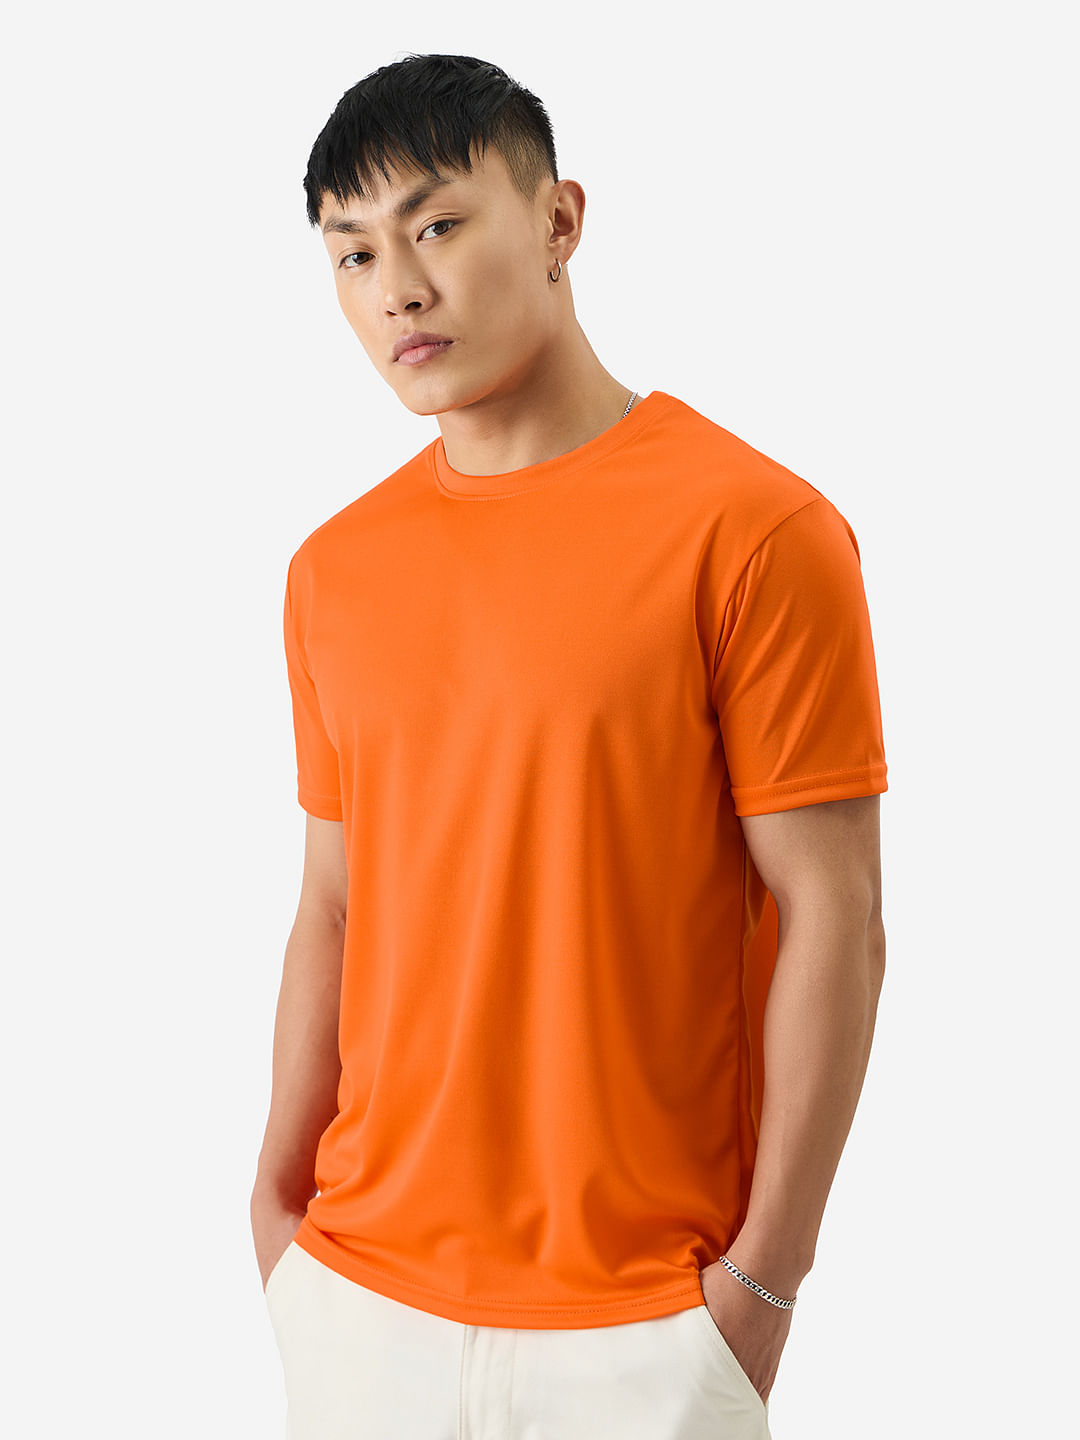 Buy Solid: Orange T-Shirts Online